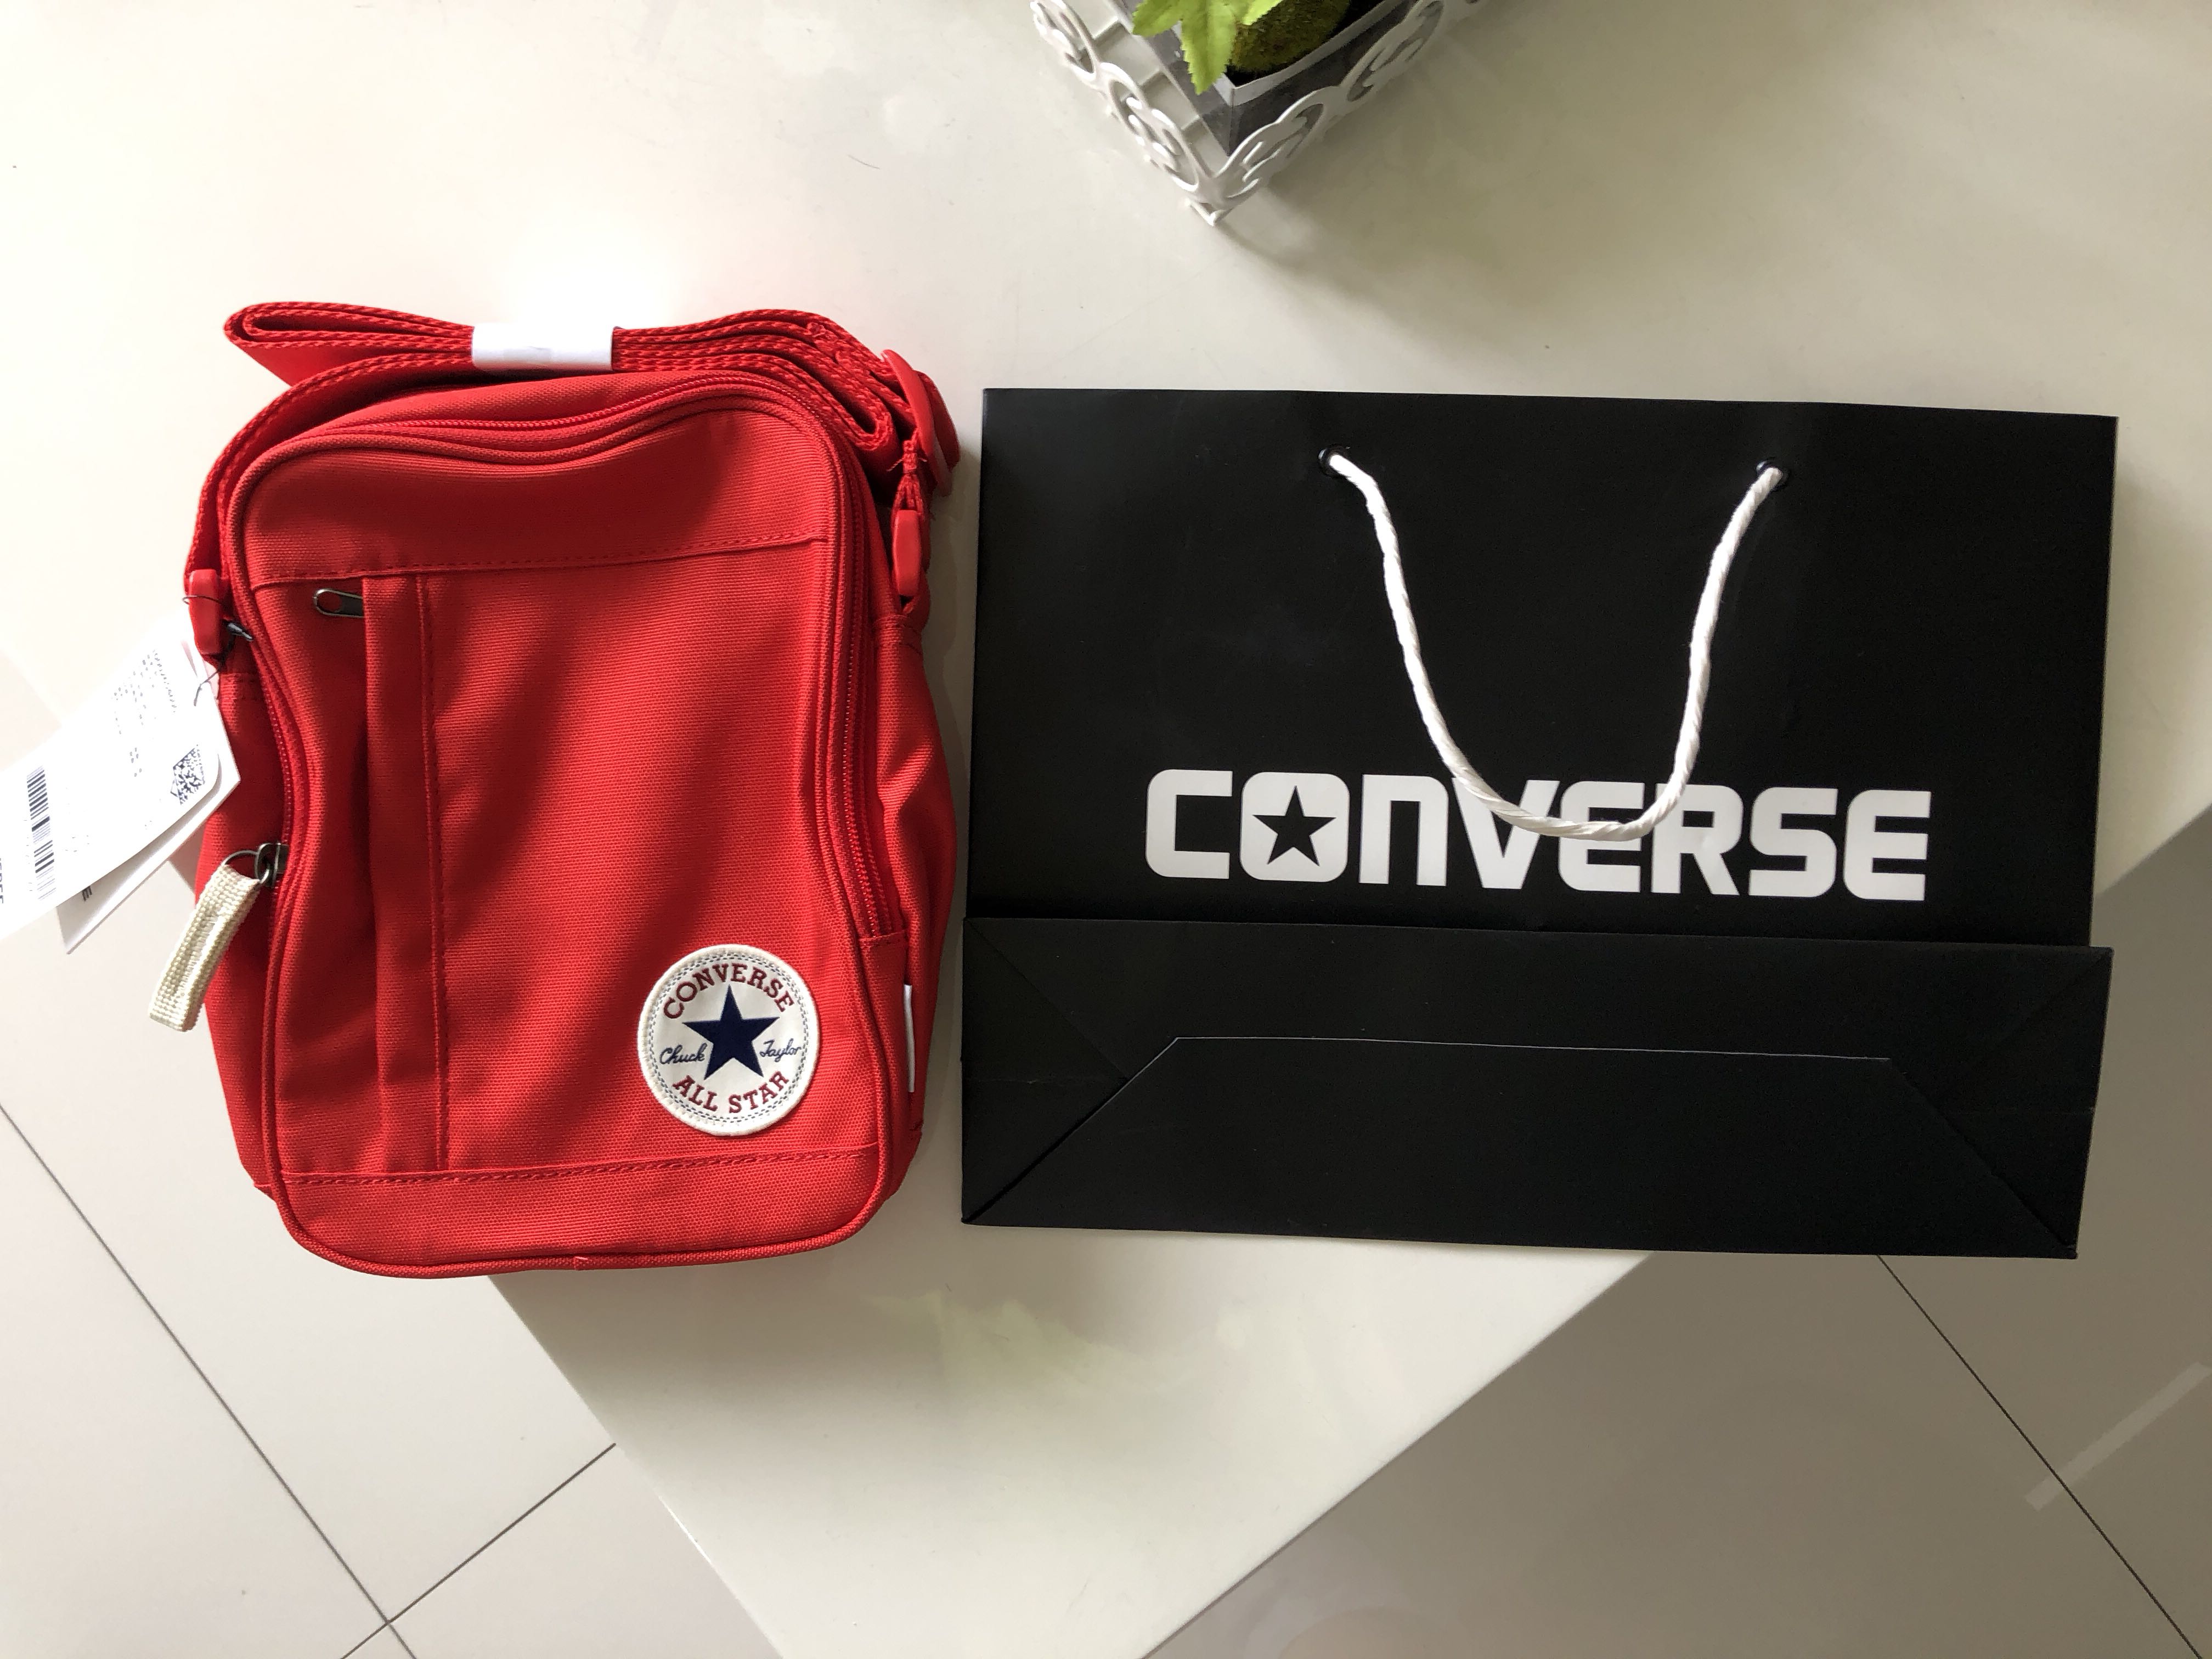 converse sling bag price